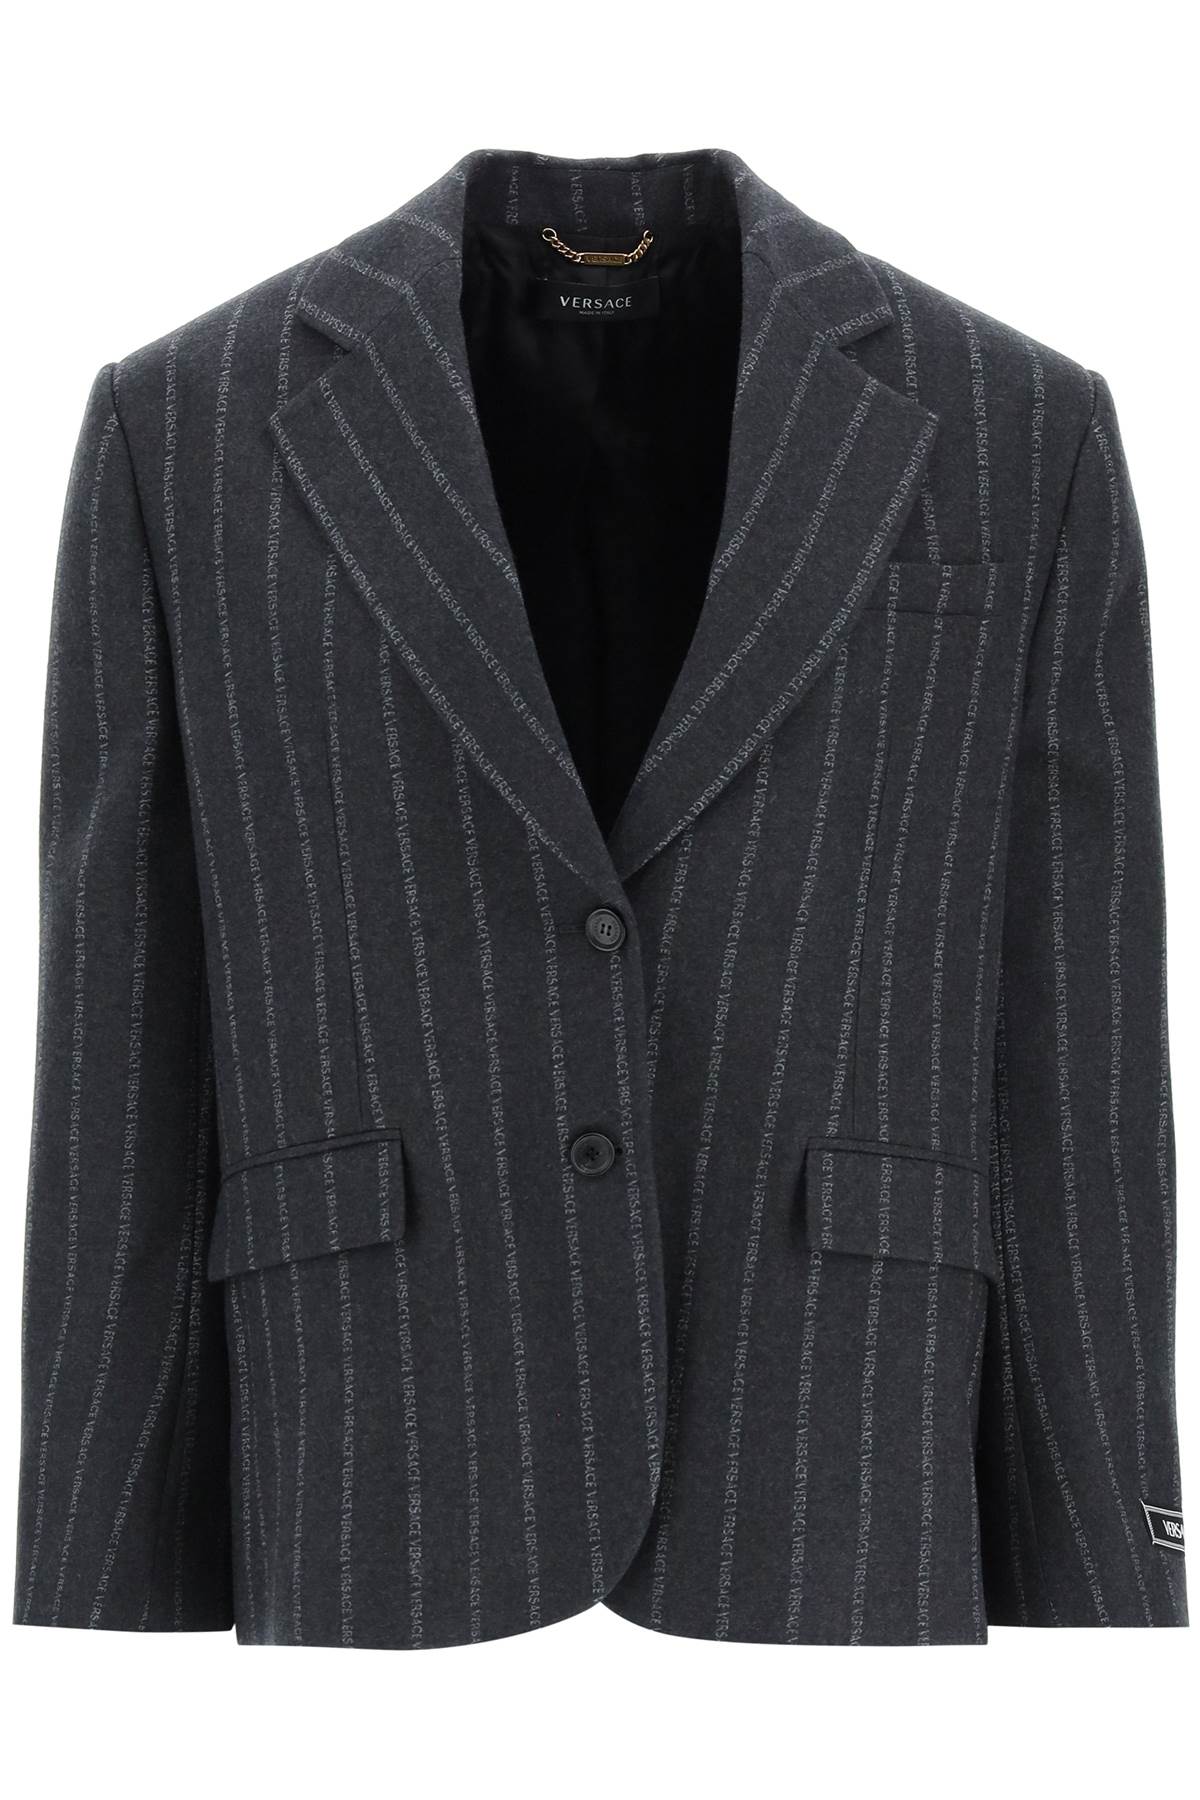 Versace Oversized Striped Logo Wool Jacket